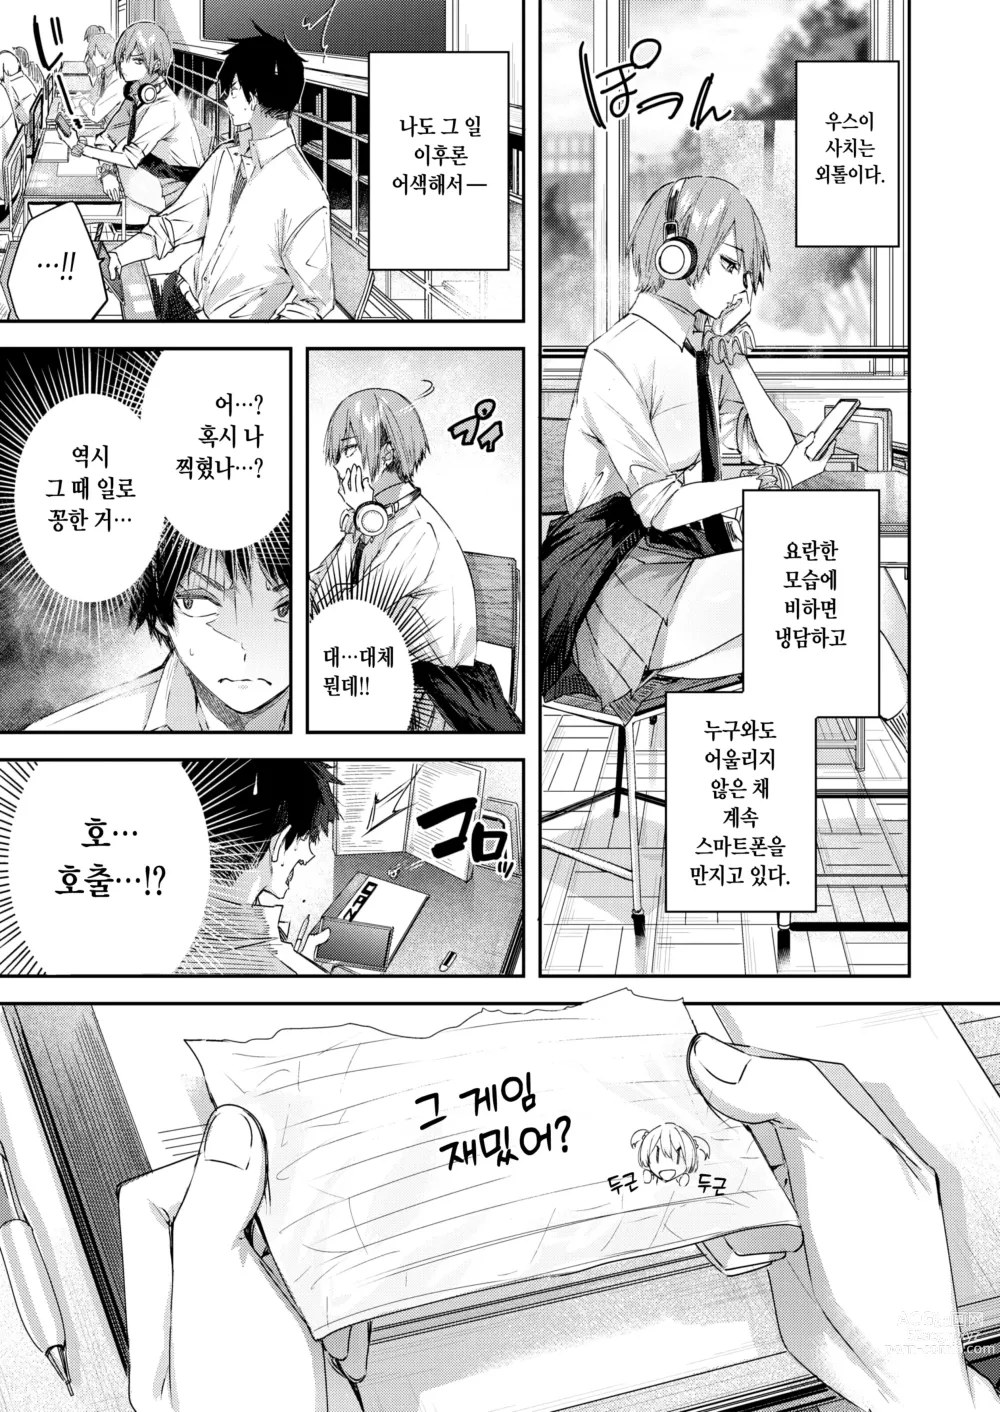 Page 6 of manga 우스이 양은 스트로베리 블론드